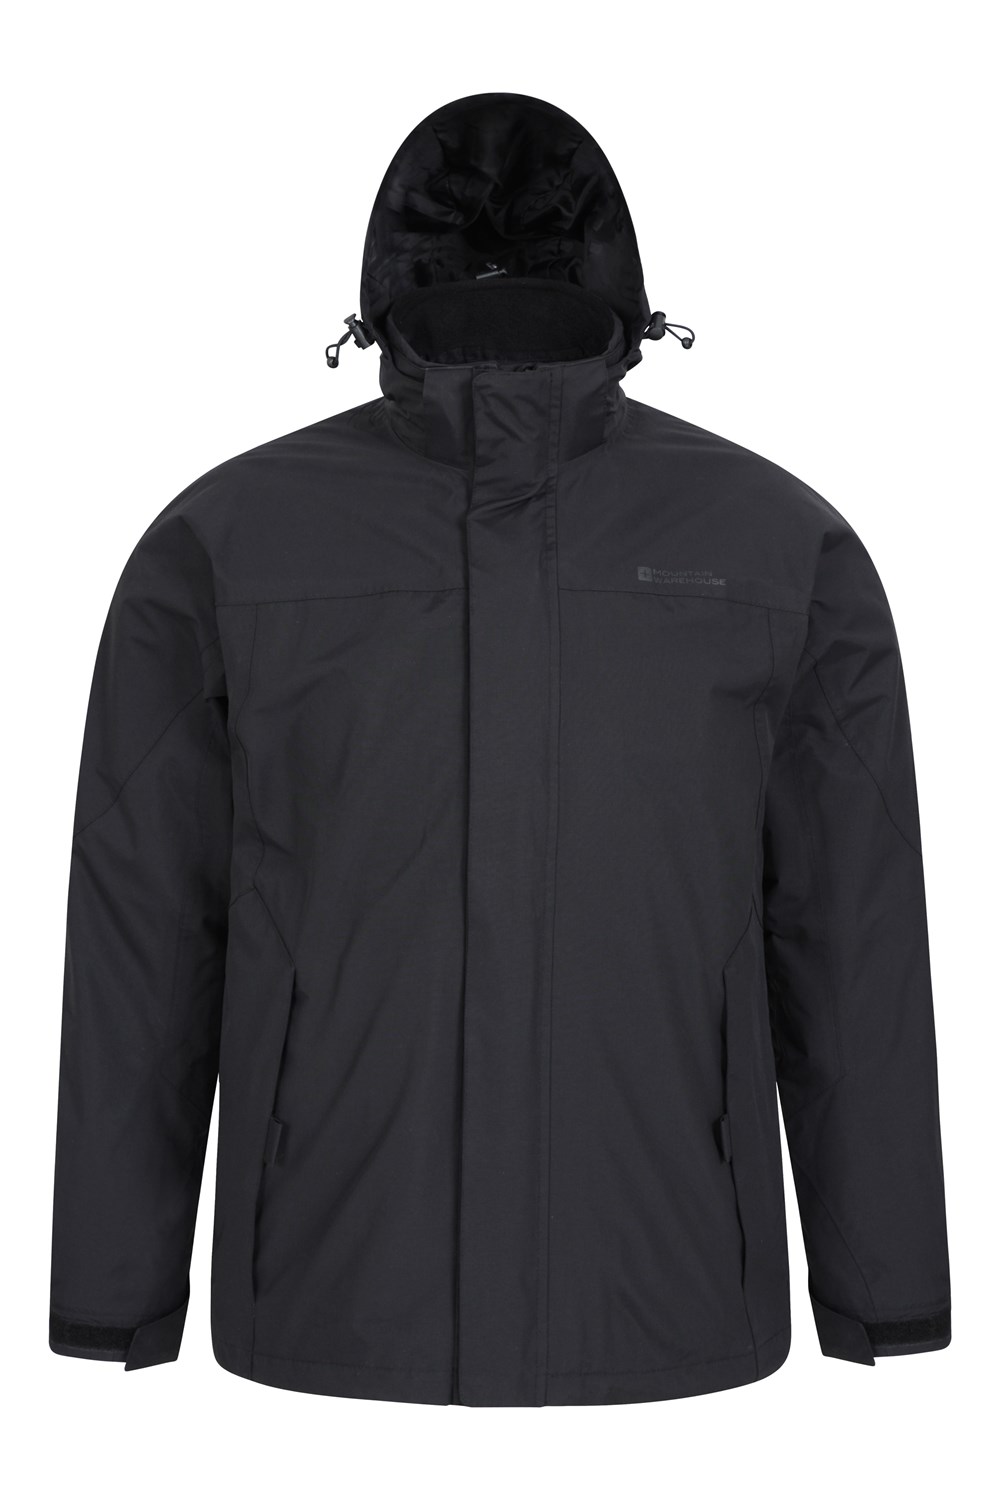 Mountain Warehouse Mens 3 in 1 Waterproof Coat Rain Jacket Fleece Inner ...